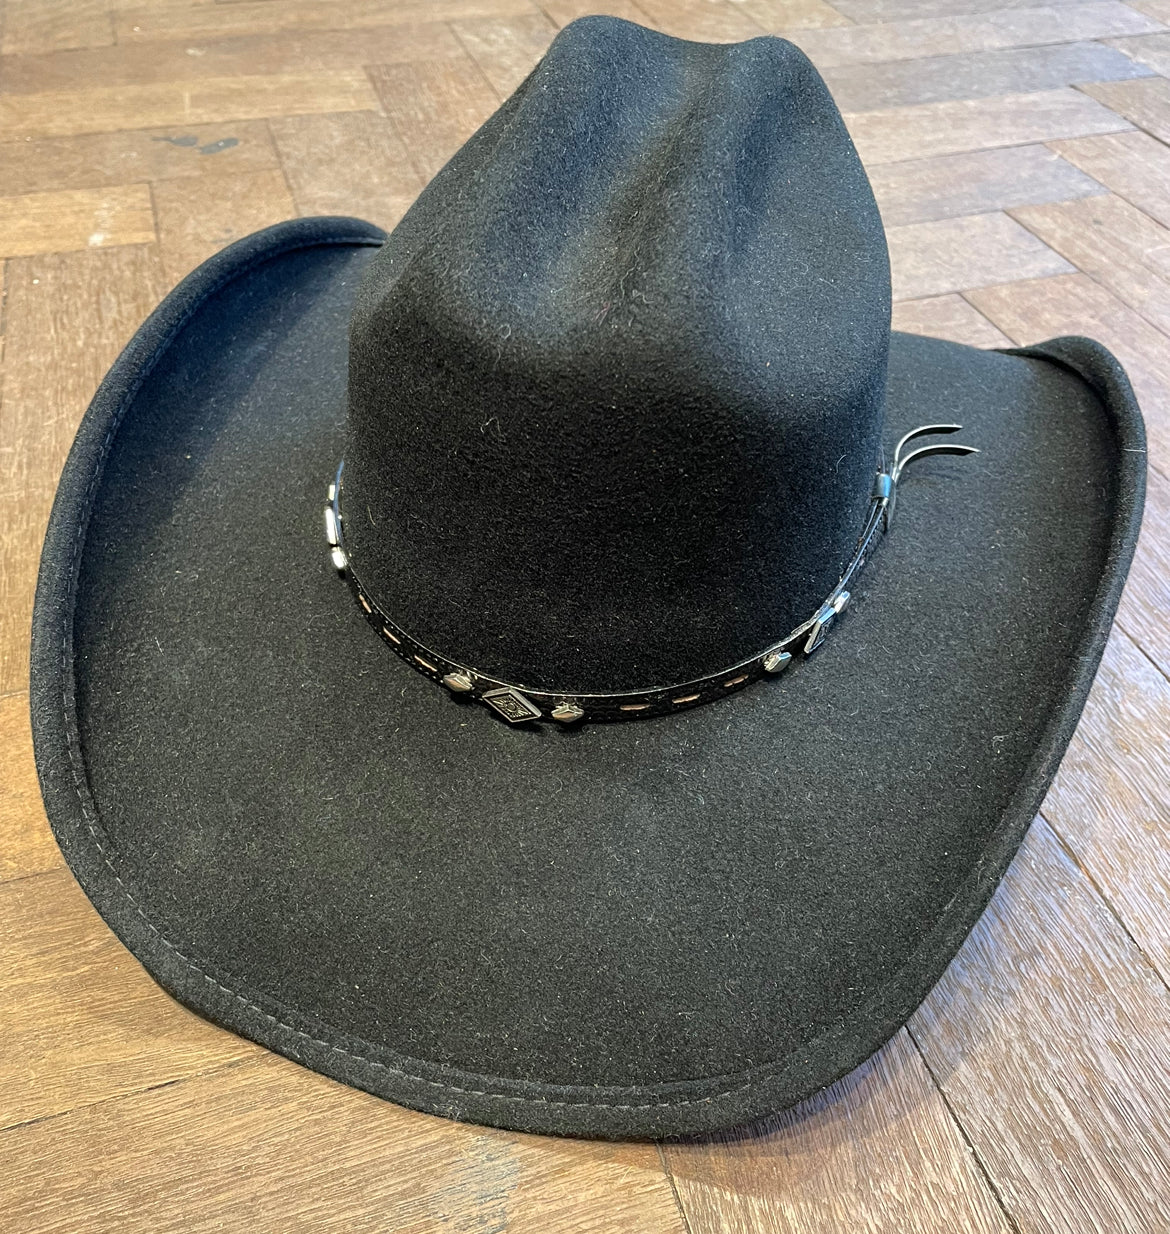 Black cowboy hat with small concho rim